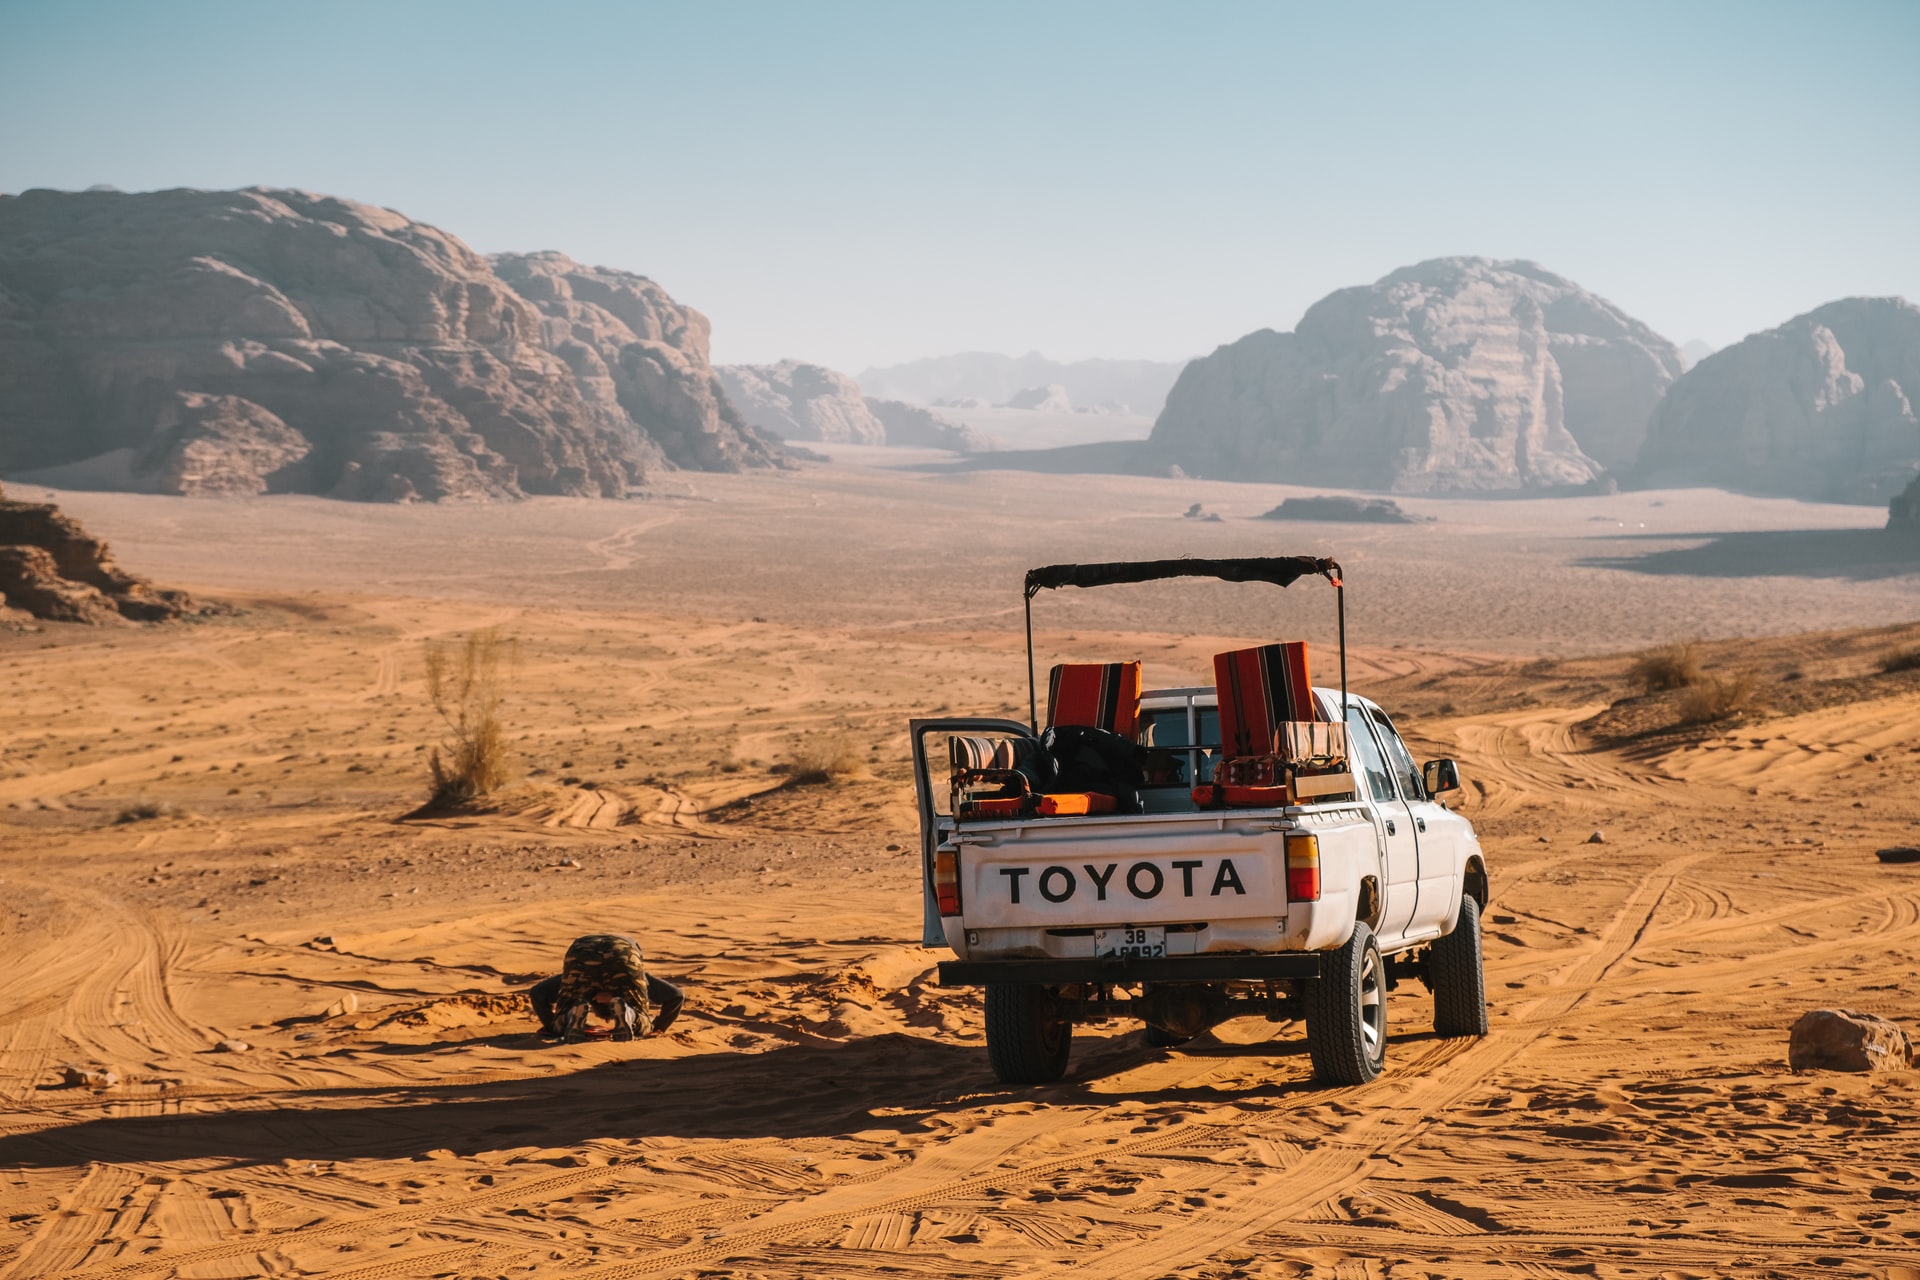 Wadi Rum Jordan itinerary